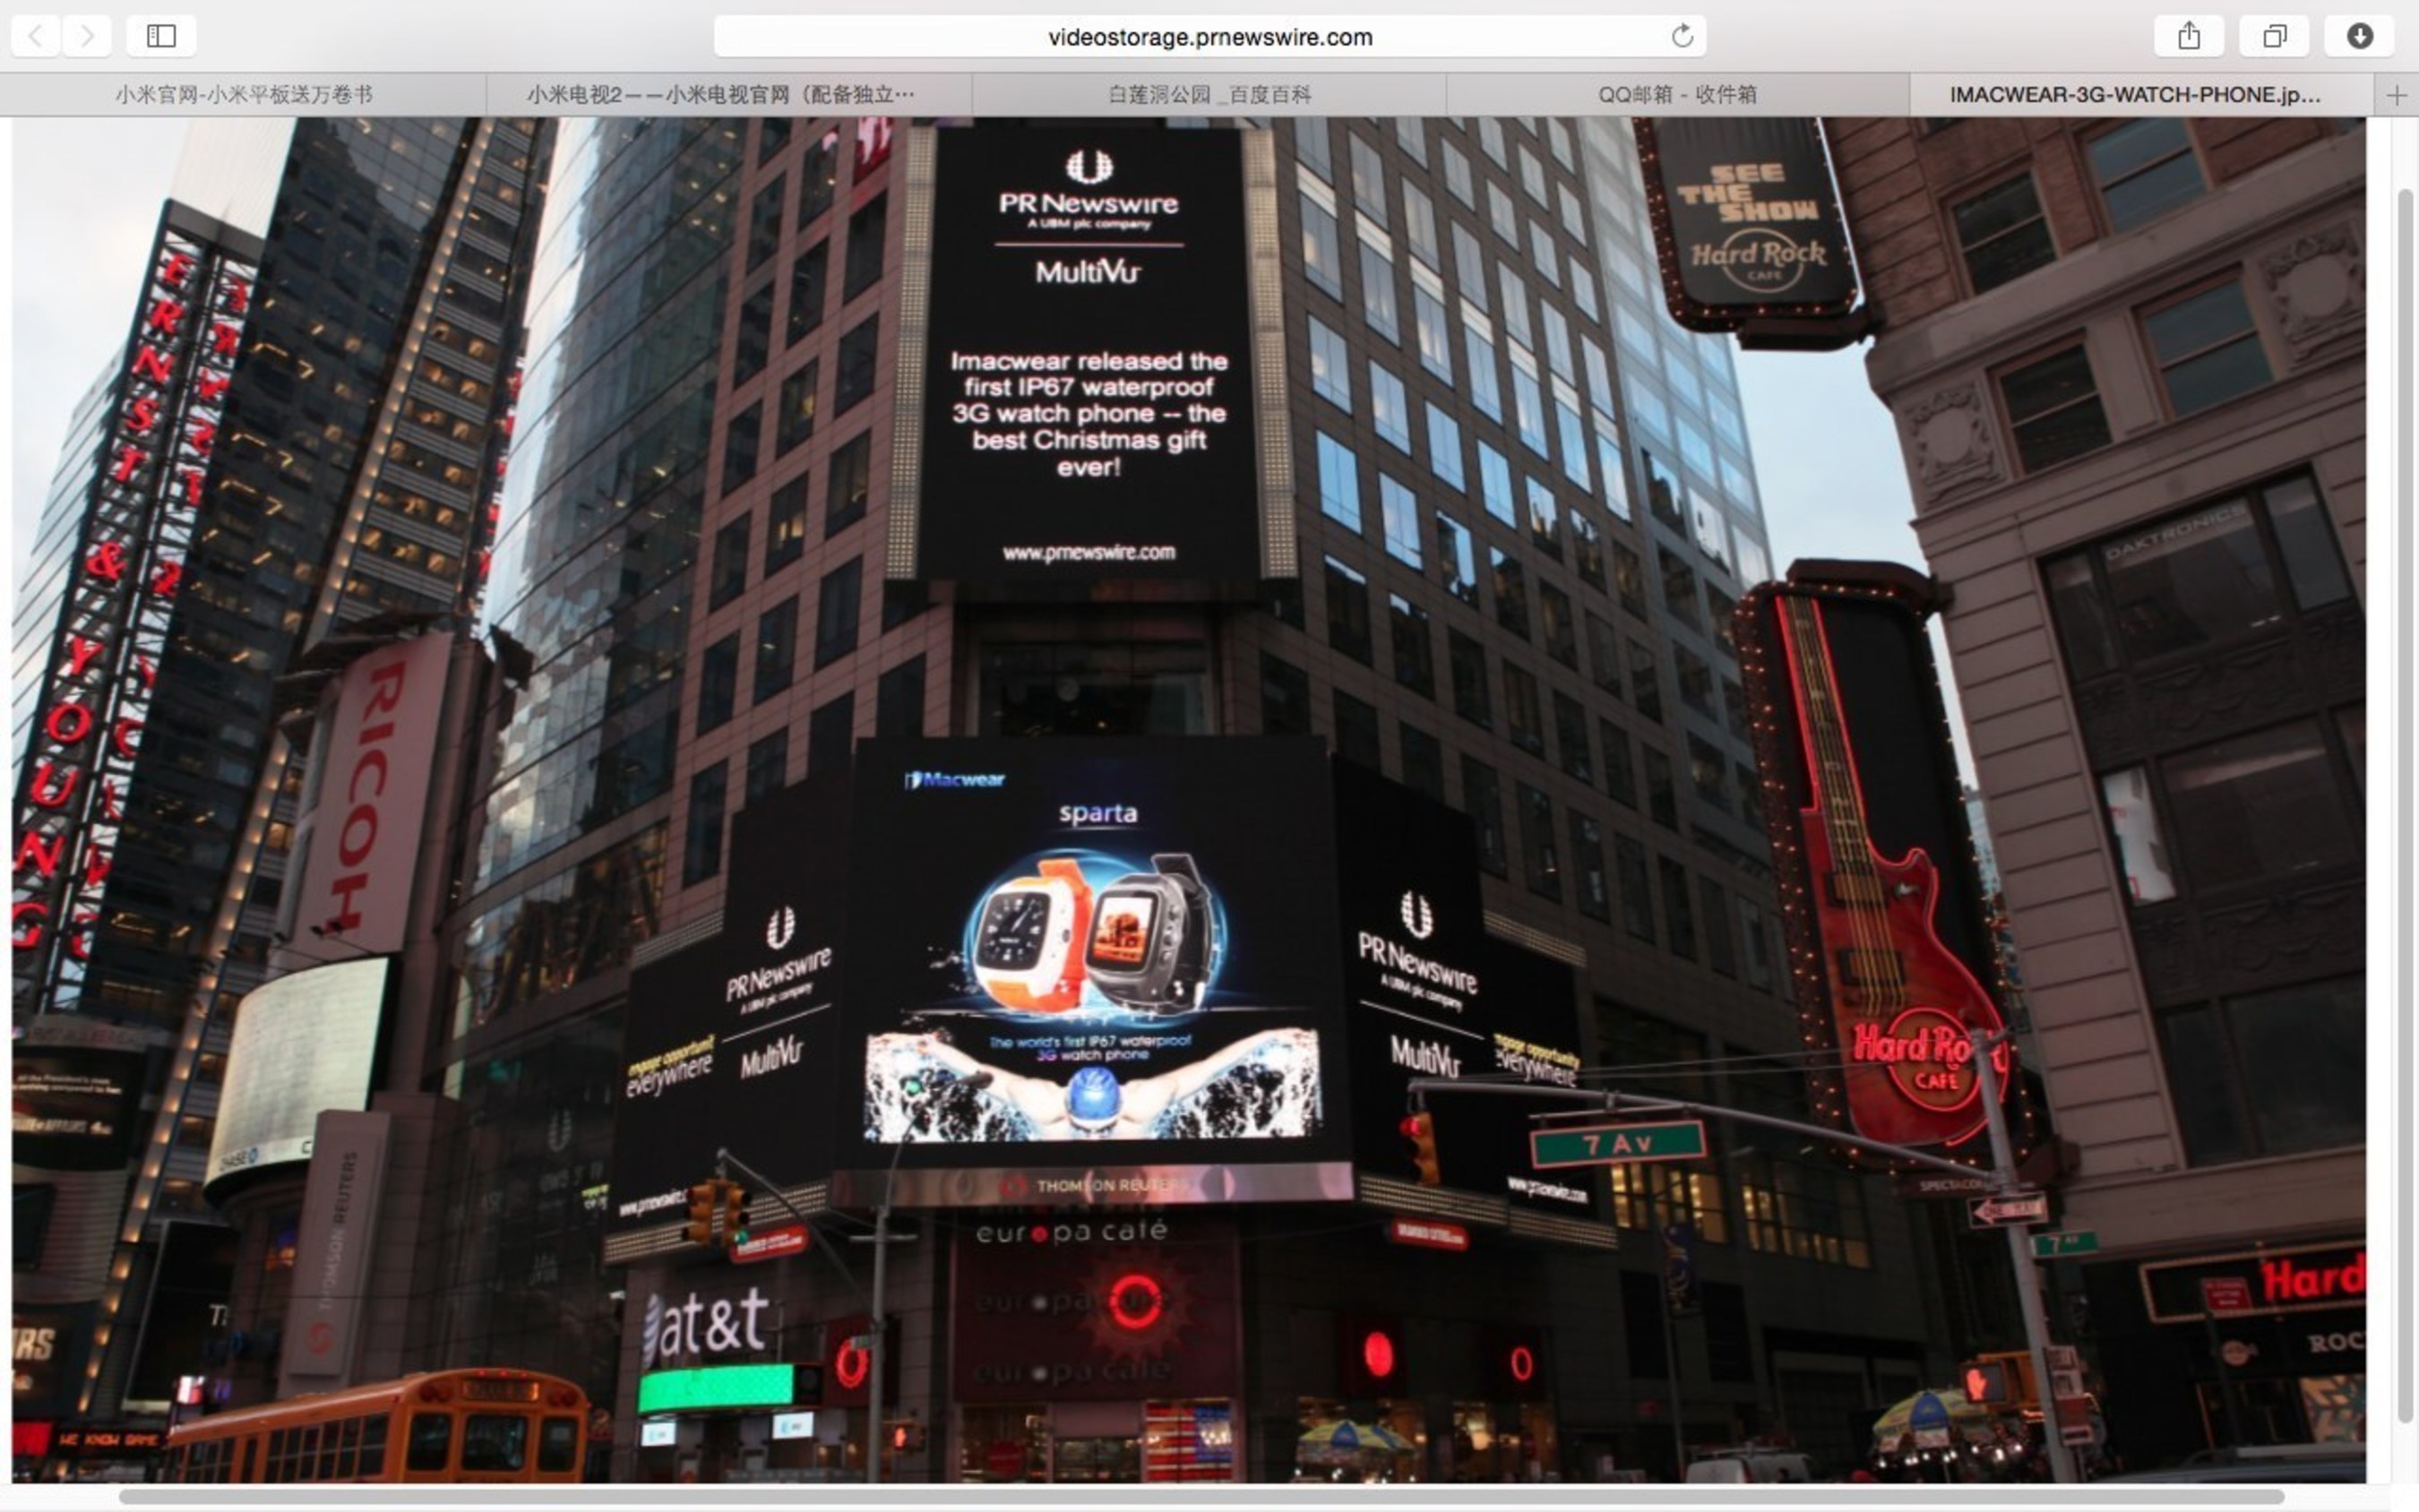 Novel Wearable Brand Imacwear Showcased in New York's Times Square